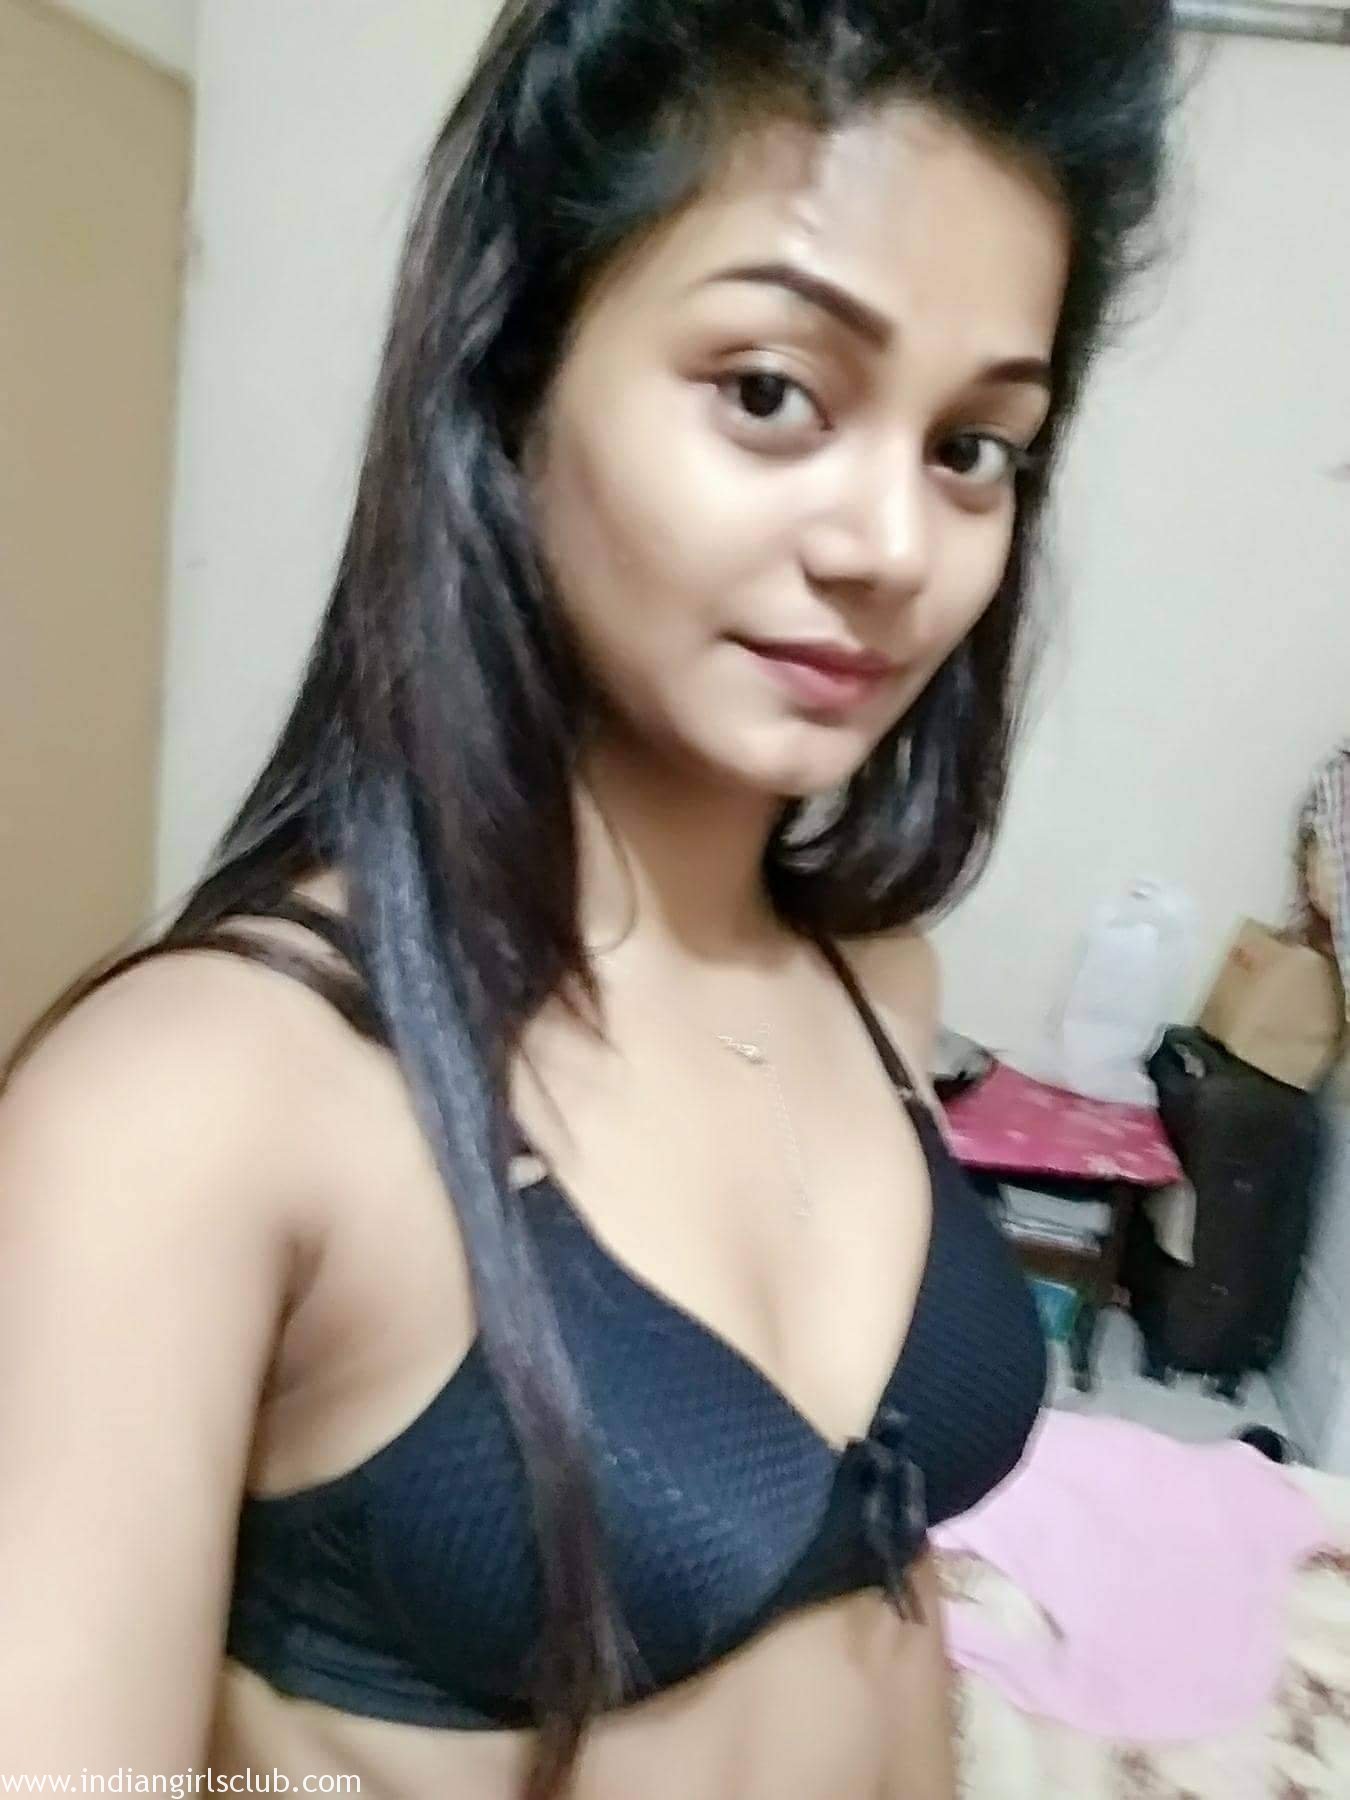 juicy_indian_teen_homemade_porn_4 - Indian Girls Club